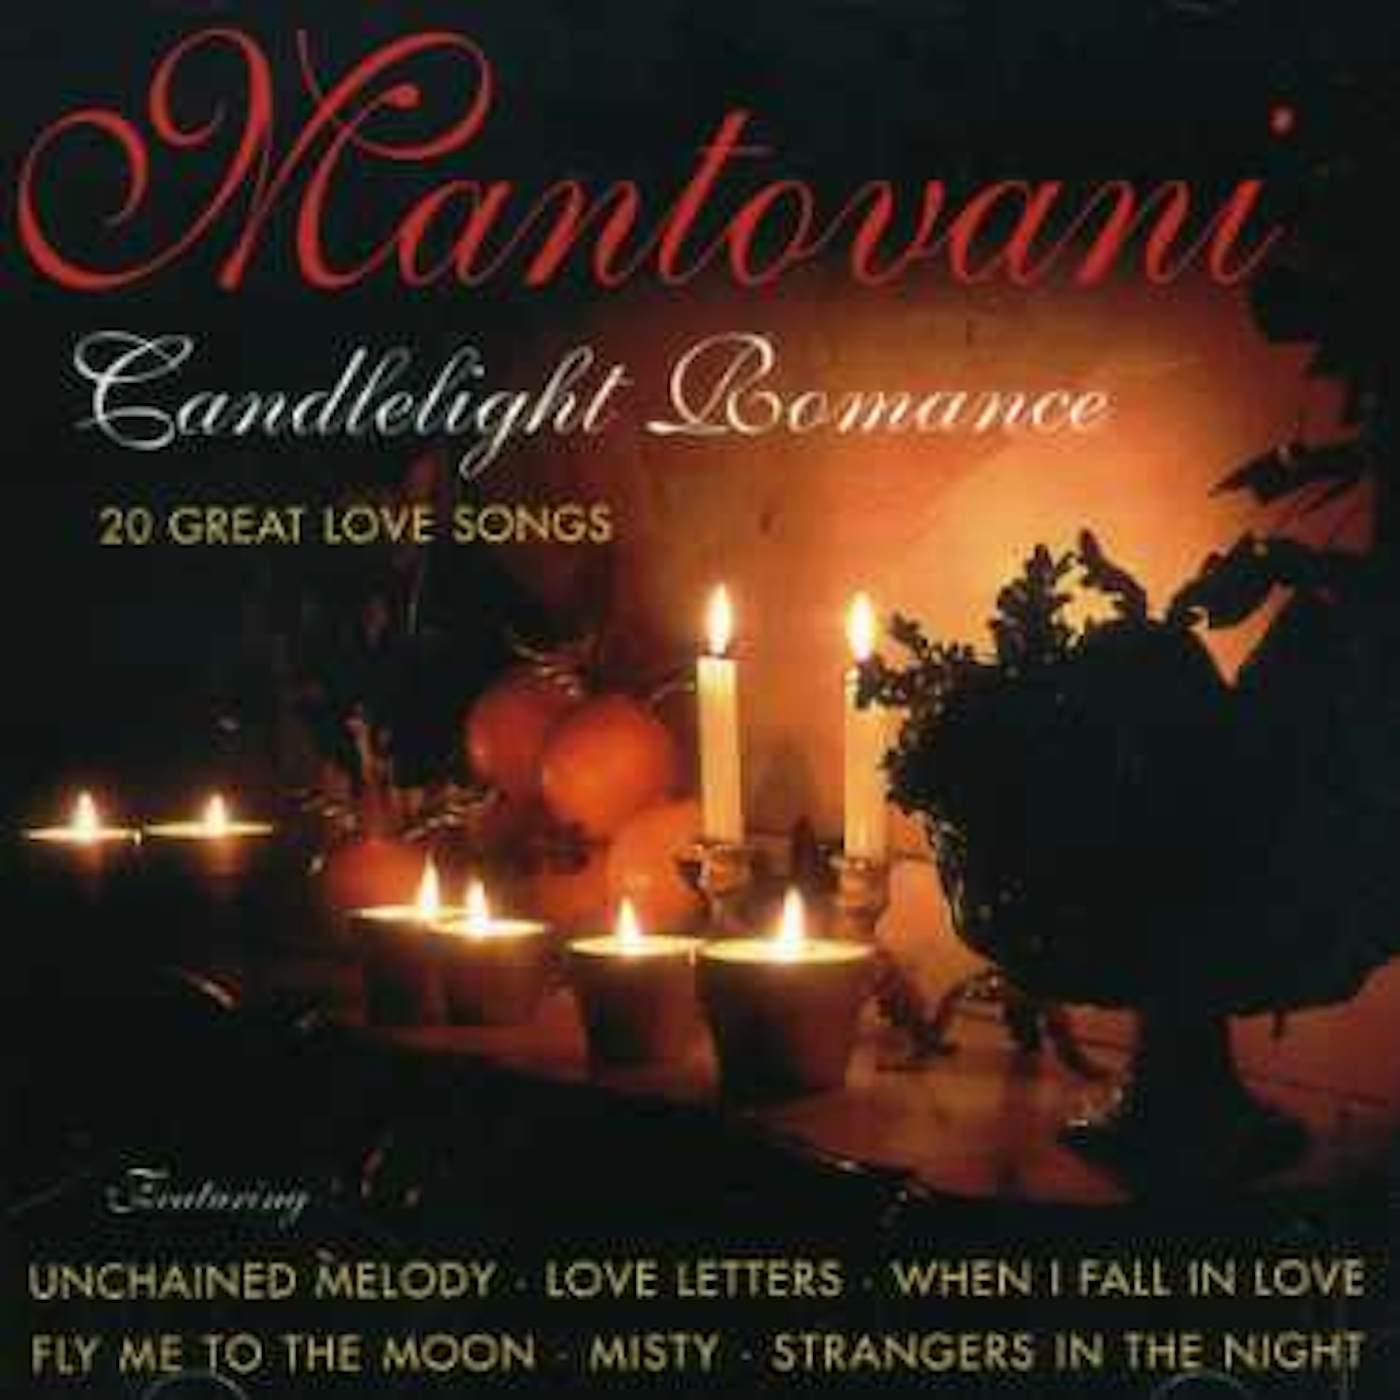 Mantovani & His Orchestra CANDLELIGHT ROMANCE CD